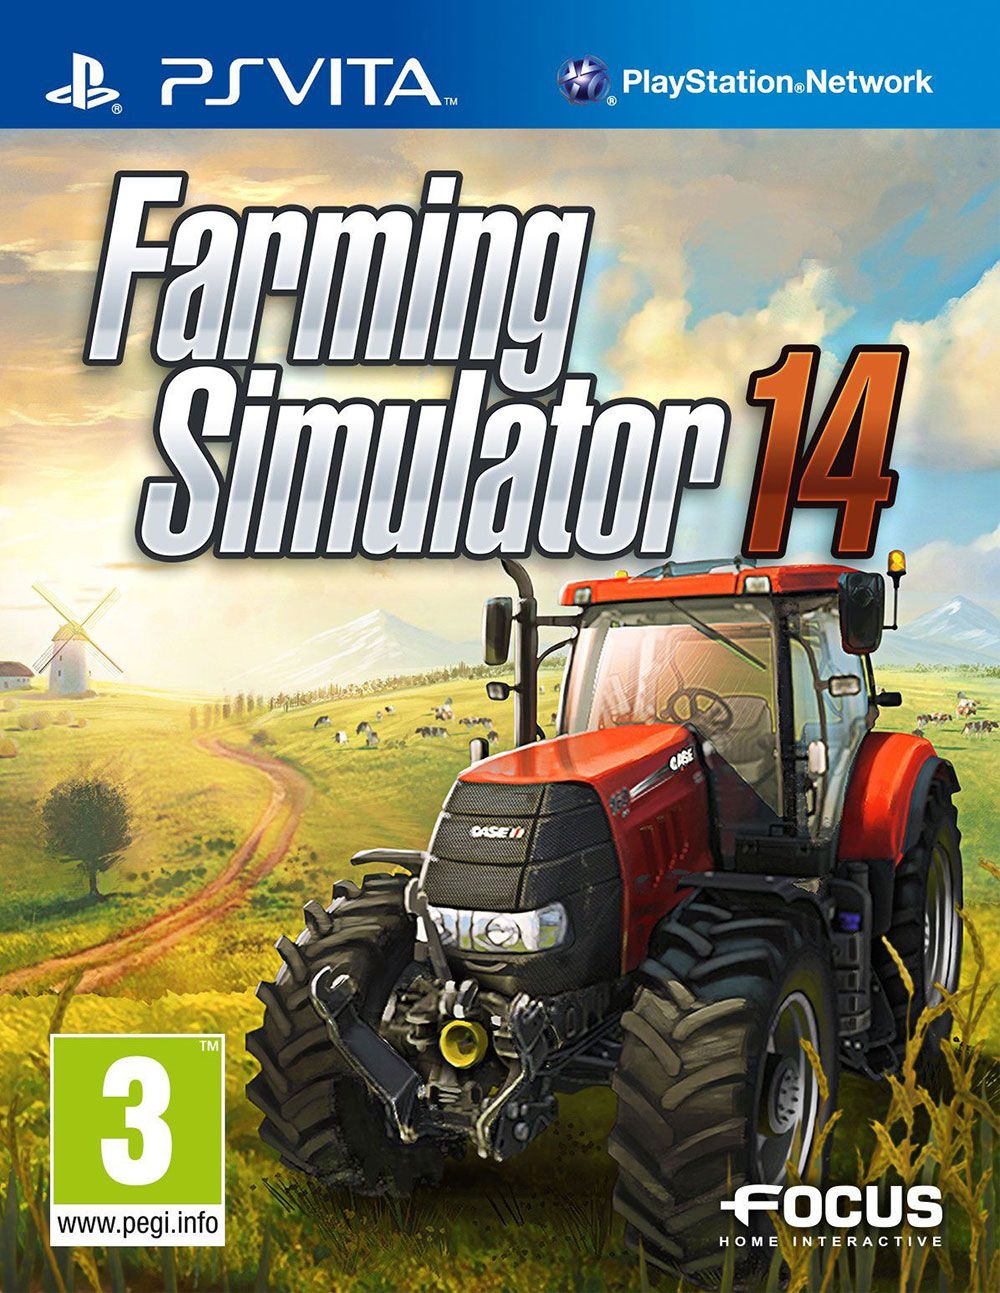 Farming Simulator 14 (PS Vita) | PlayStation Vita